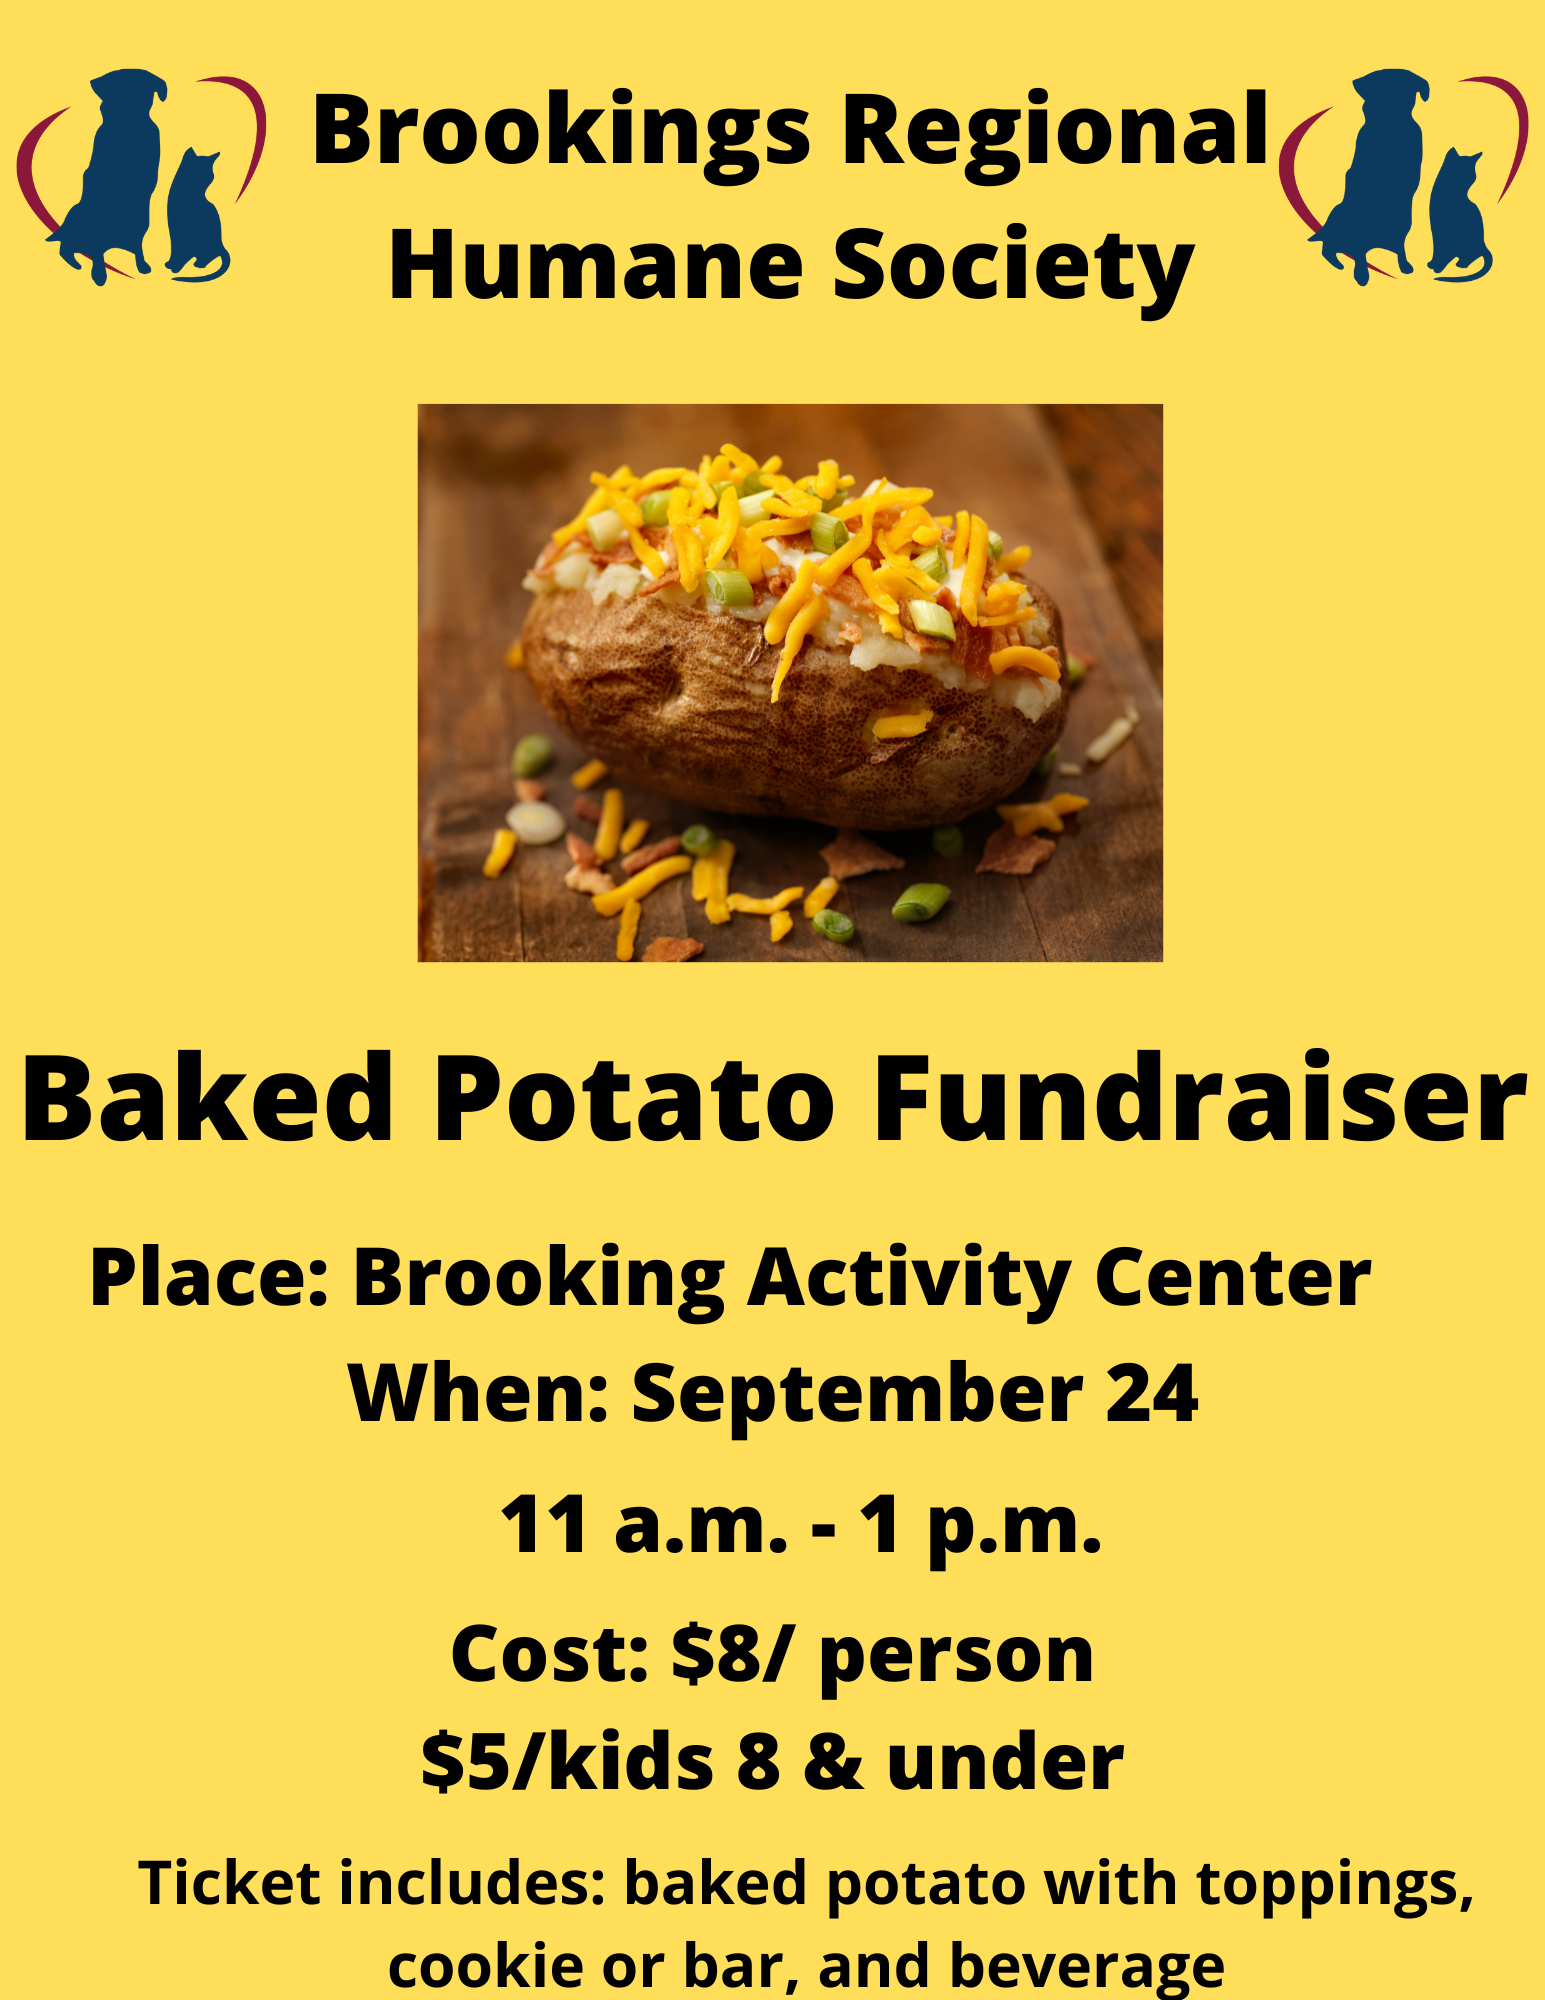 Brookings Regional Humane Society Baked Potato Fundraiser